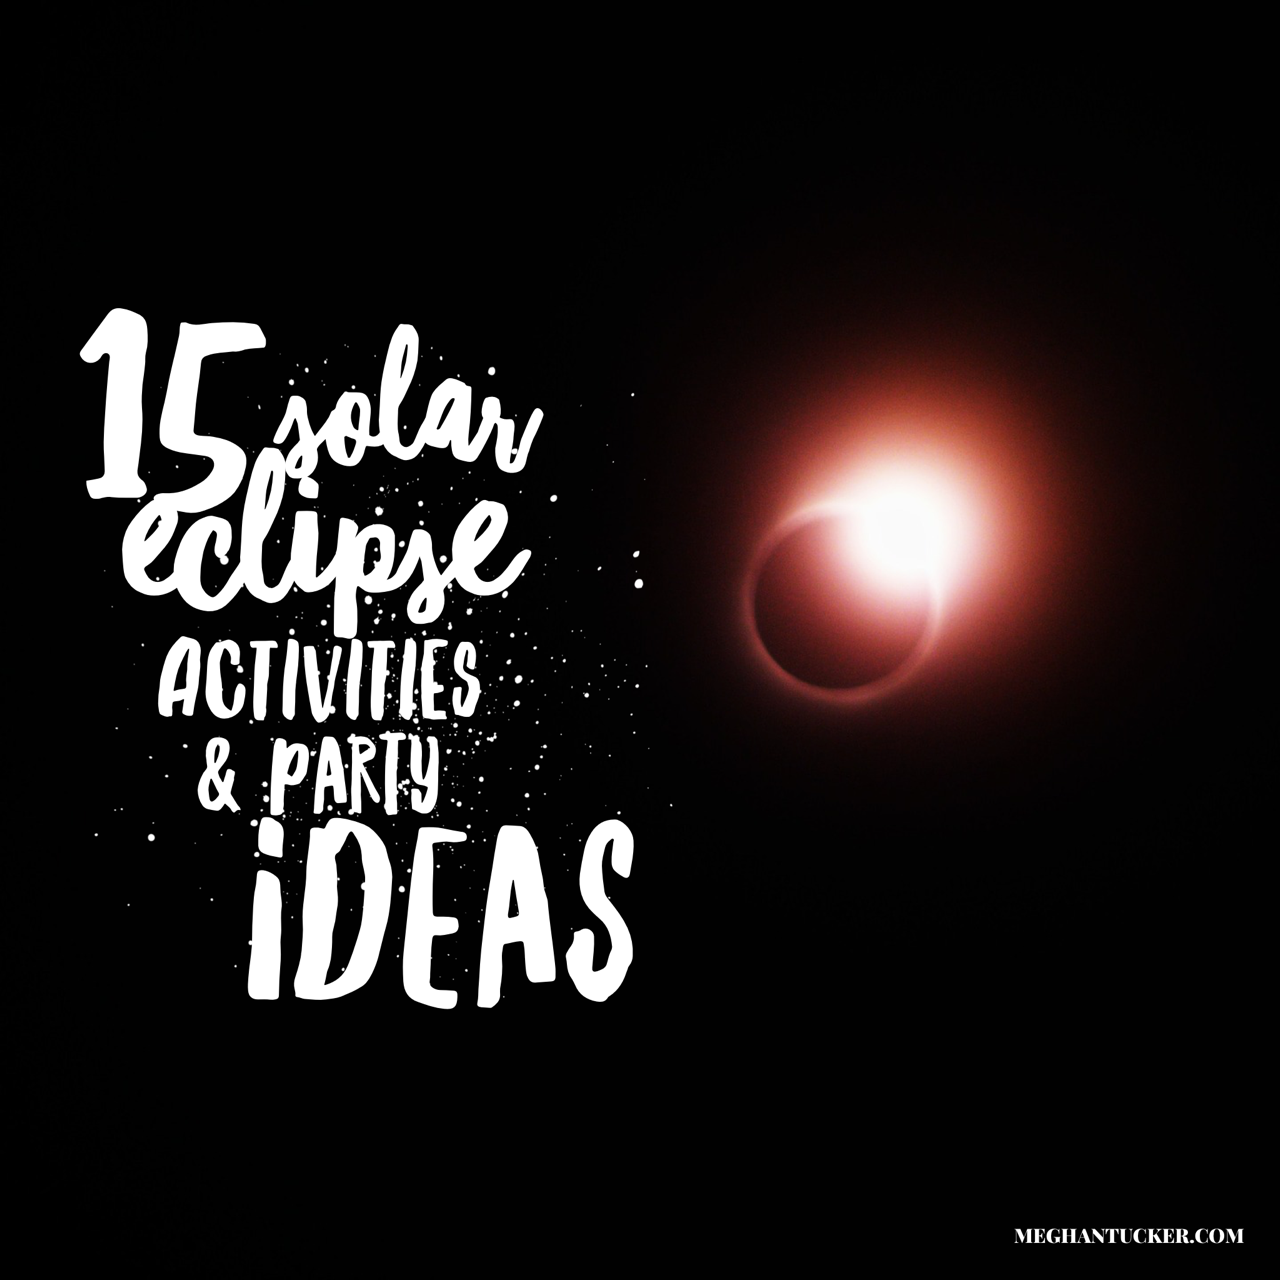 15 Solar Eclipse Activities & Party Ideas